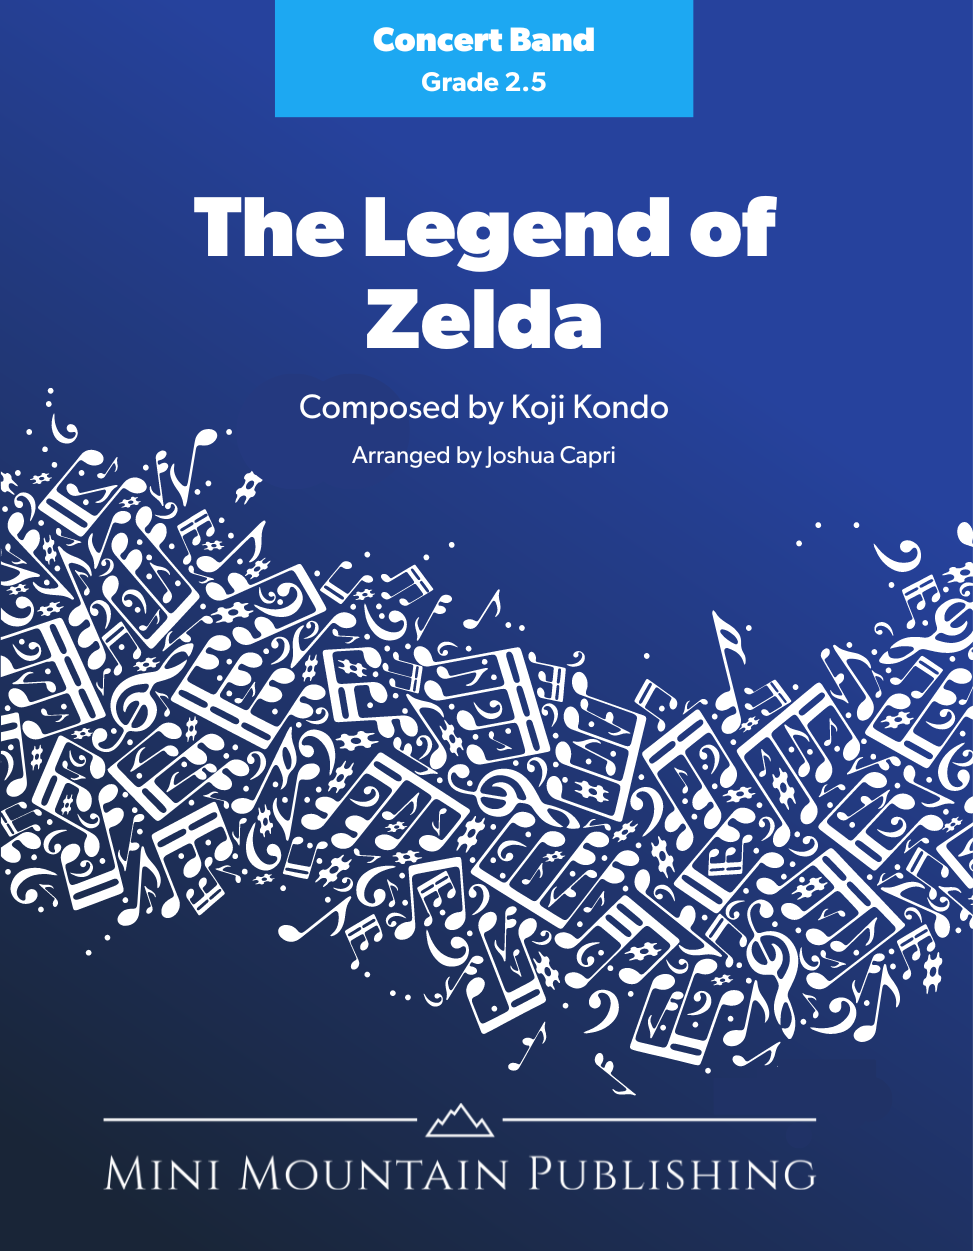 The Legend of Zelda - Physical Copy